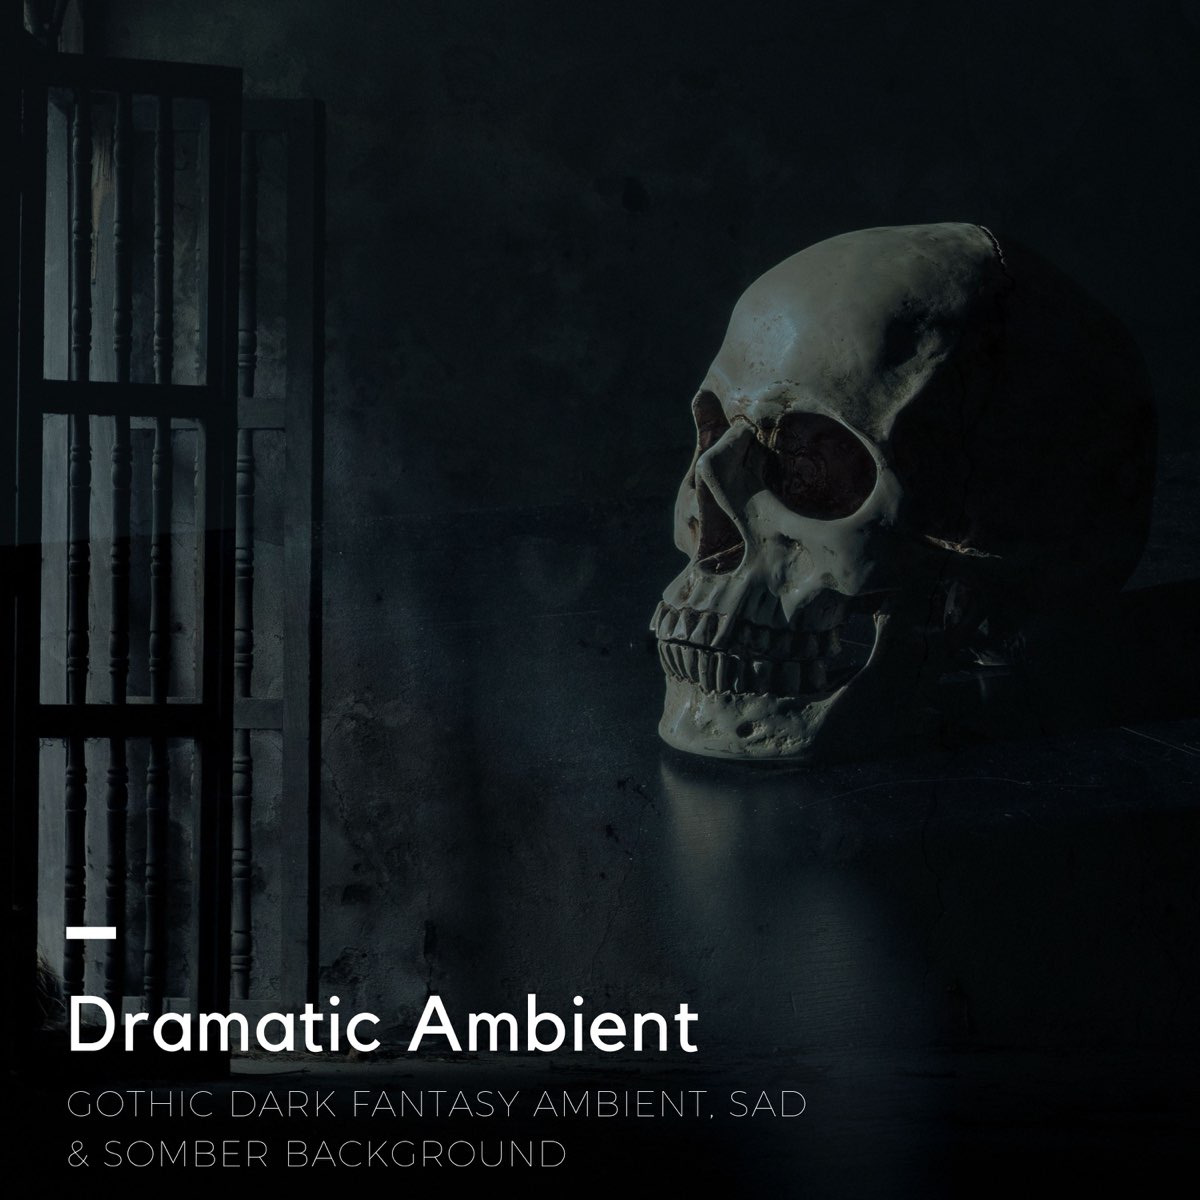 Dramatic Ambient - Gothic Dark Fantasy Ambient, Sad & Somber Background -  Album by Ambient Sound Center - Apple Music